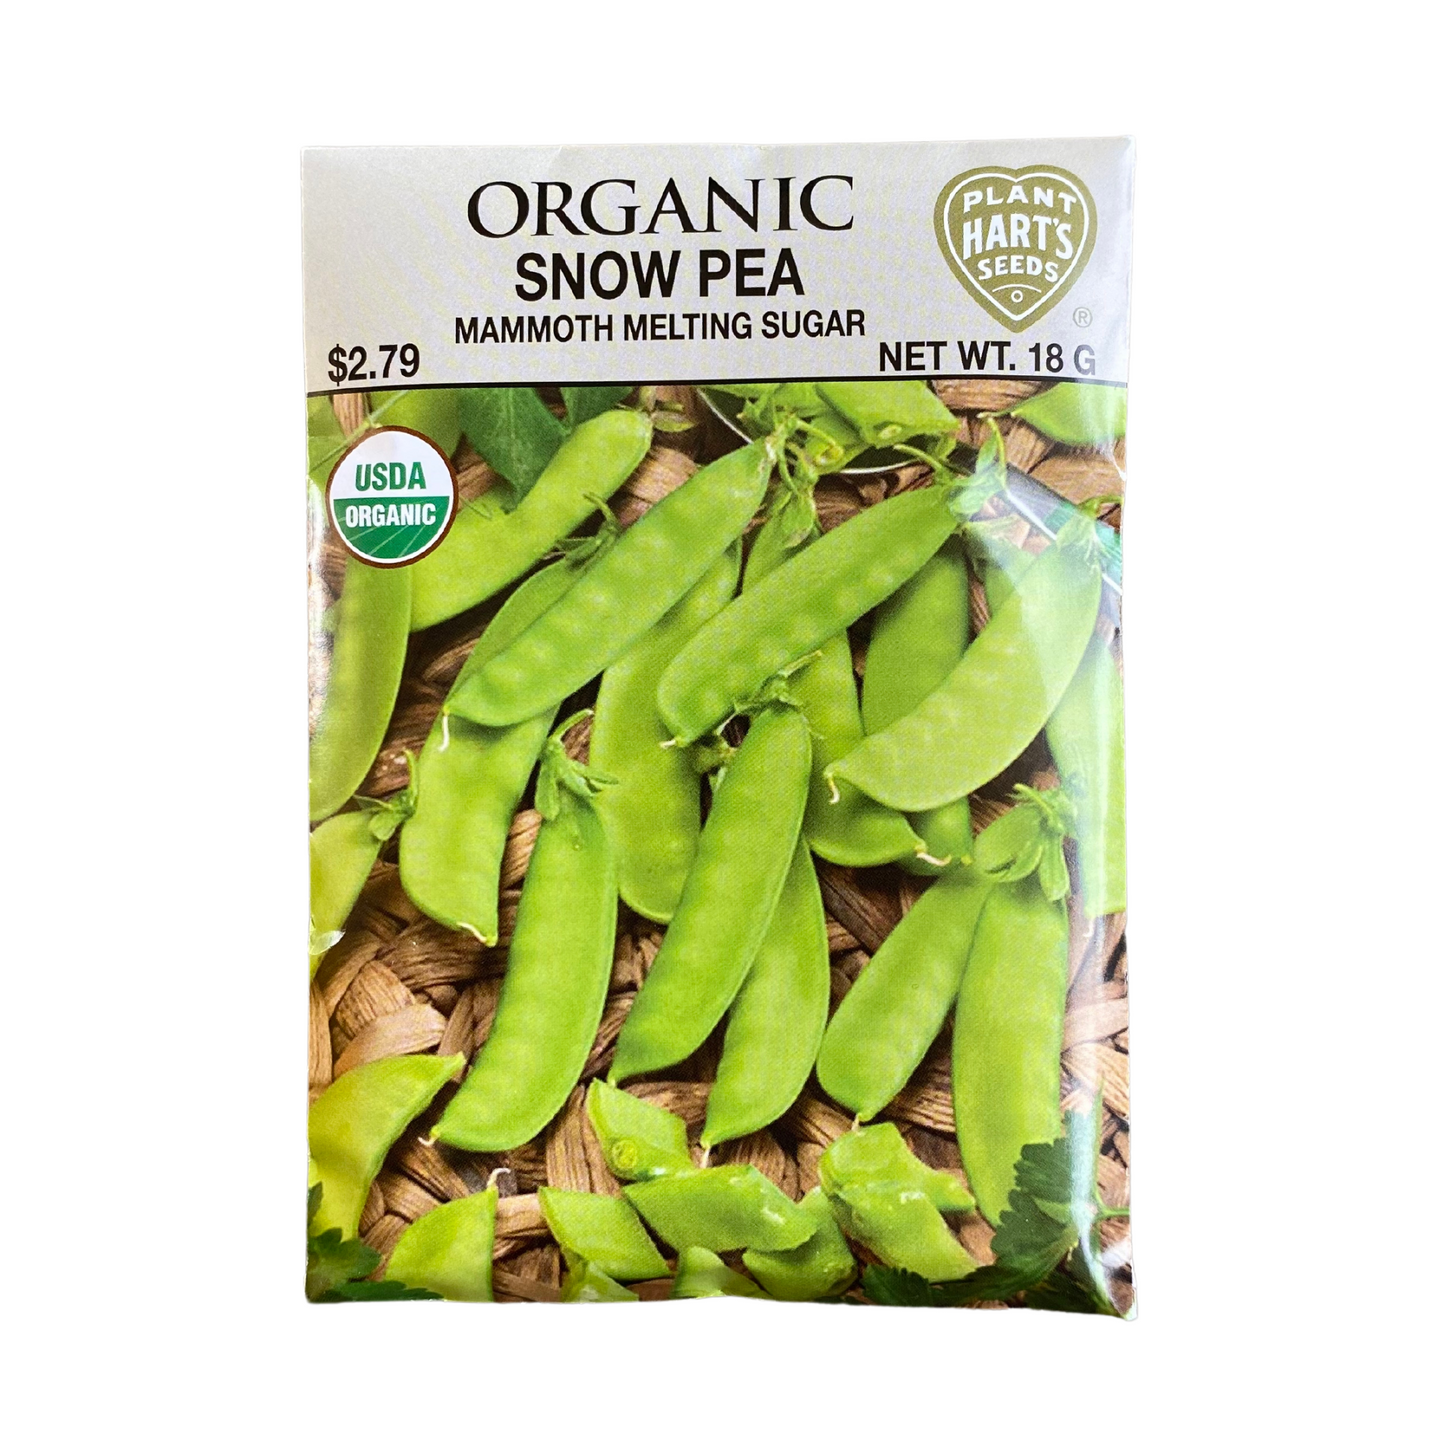 Organic Snow Pea Mammoth Melting